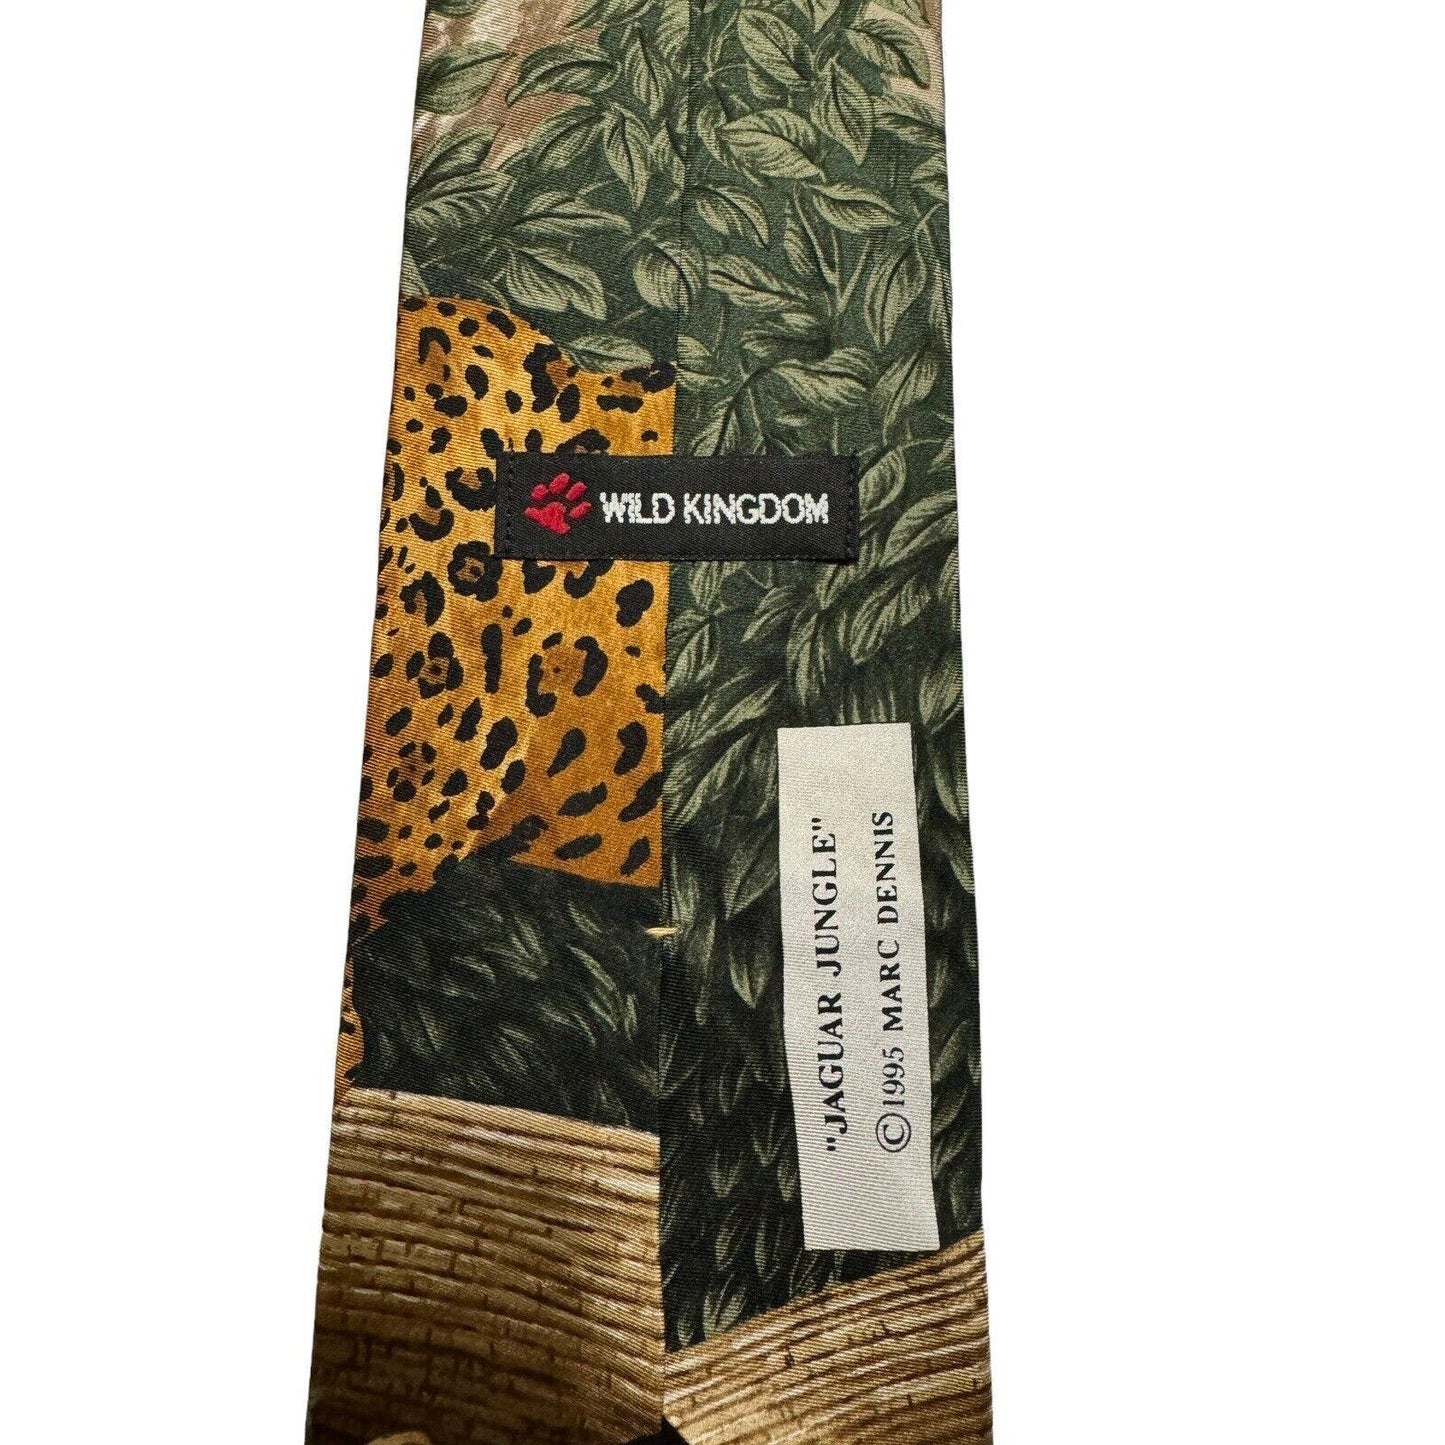 Wild Kingdom Jaguar Jungle 1995 Vintage Novelty Necktie 100% Silk